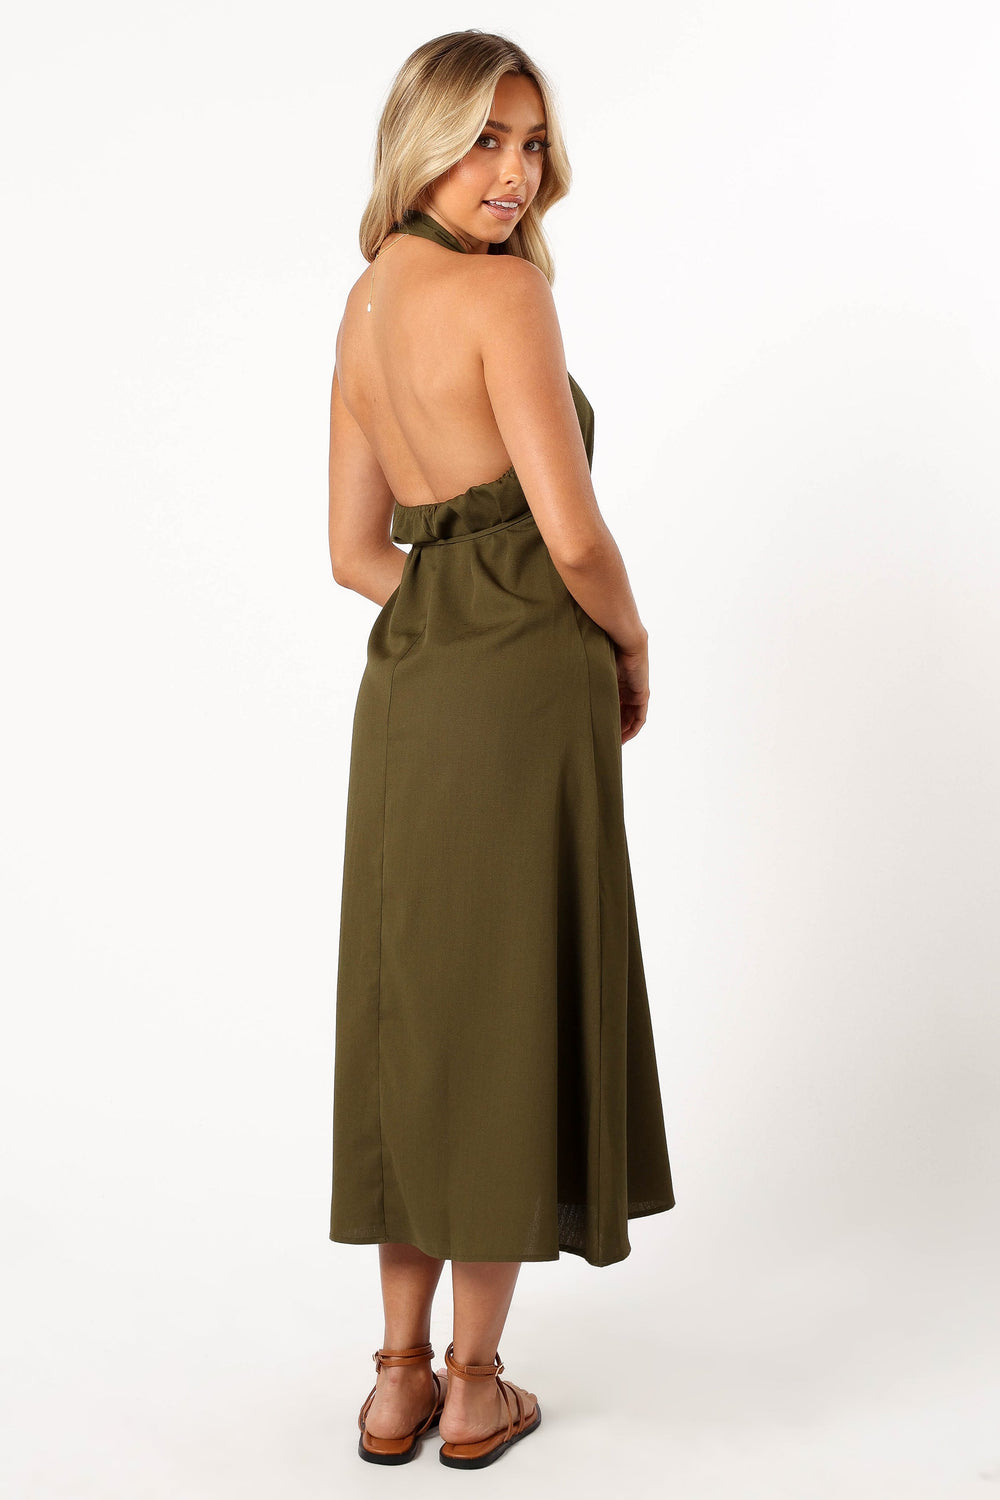 Petal and Pup USA DRESSES Ivy Halterneck Midi Dress - Olive